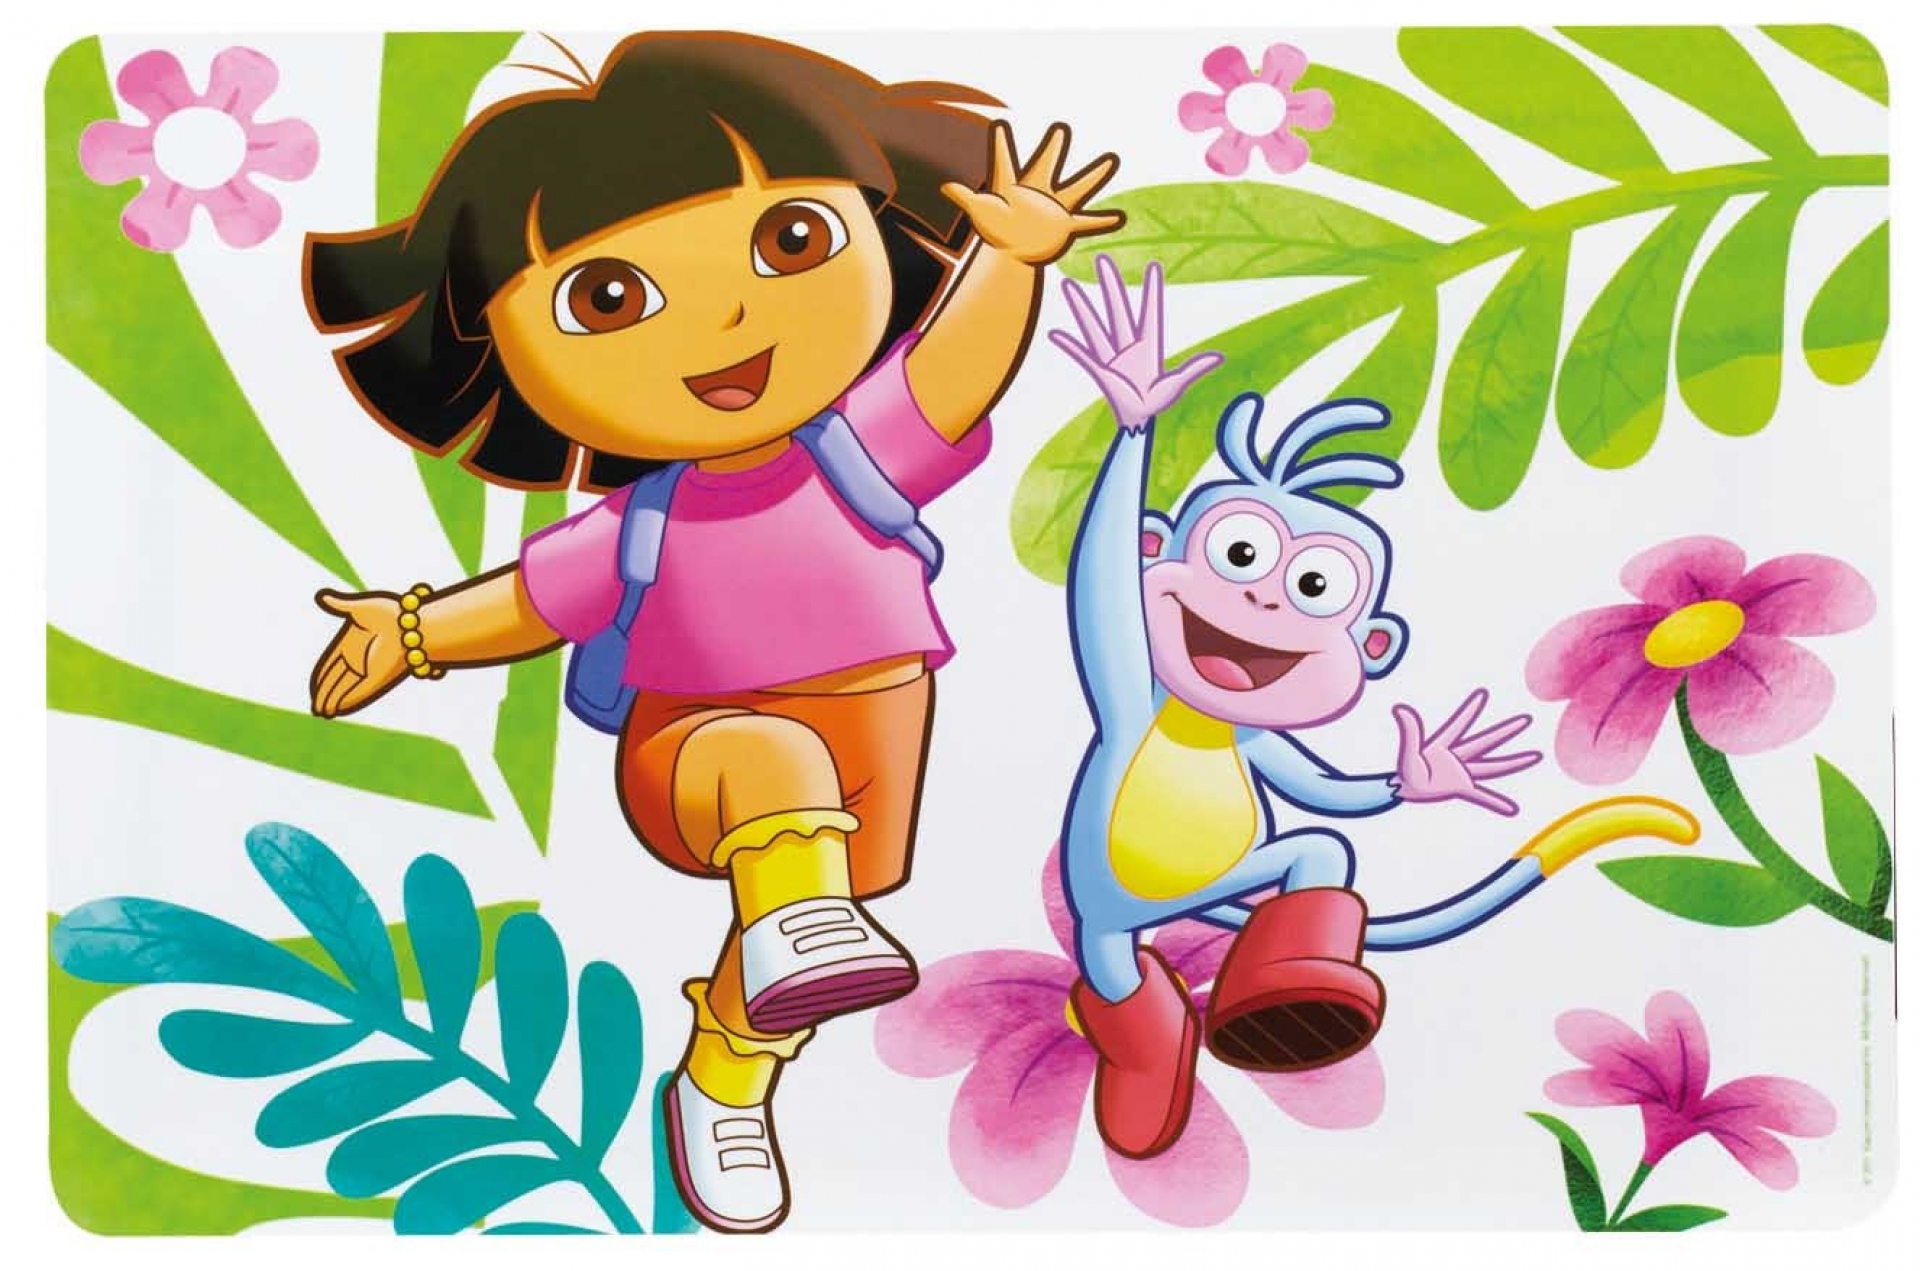 Dora the Explorer Image Wallpaper Download HD | Cartoons Images